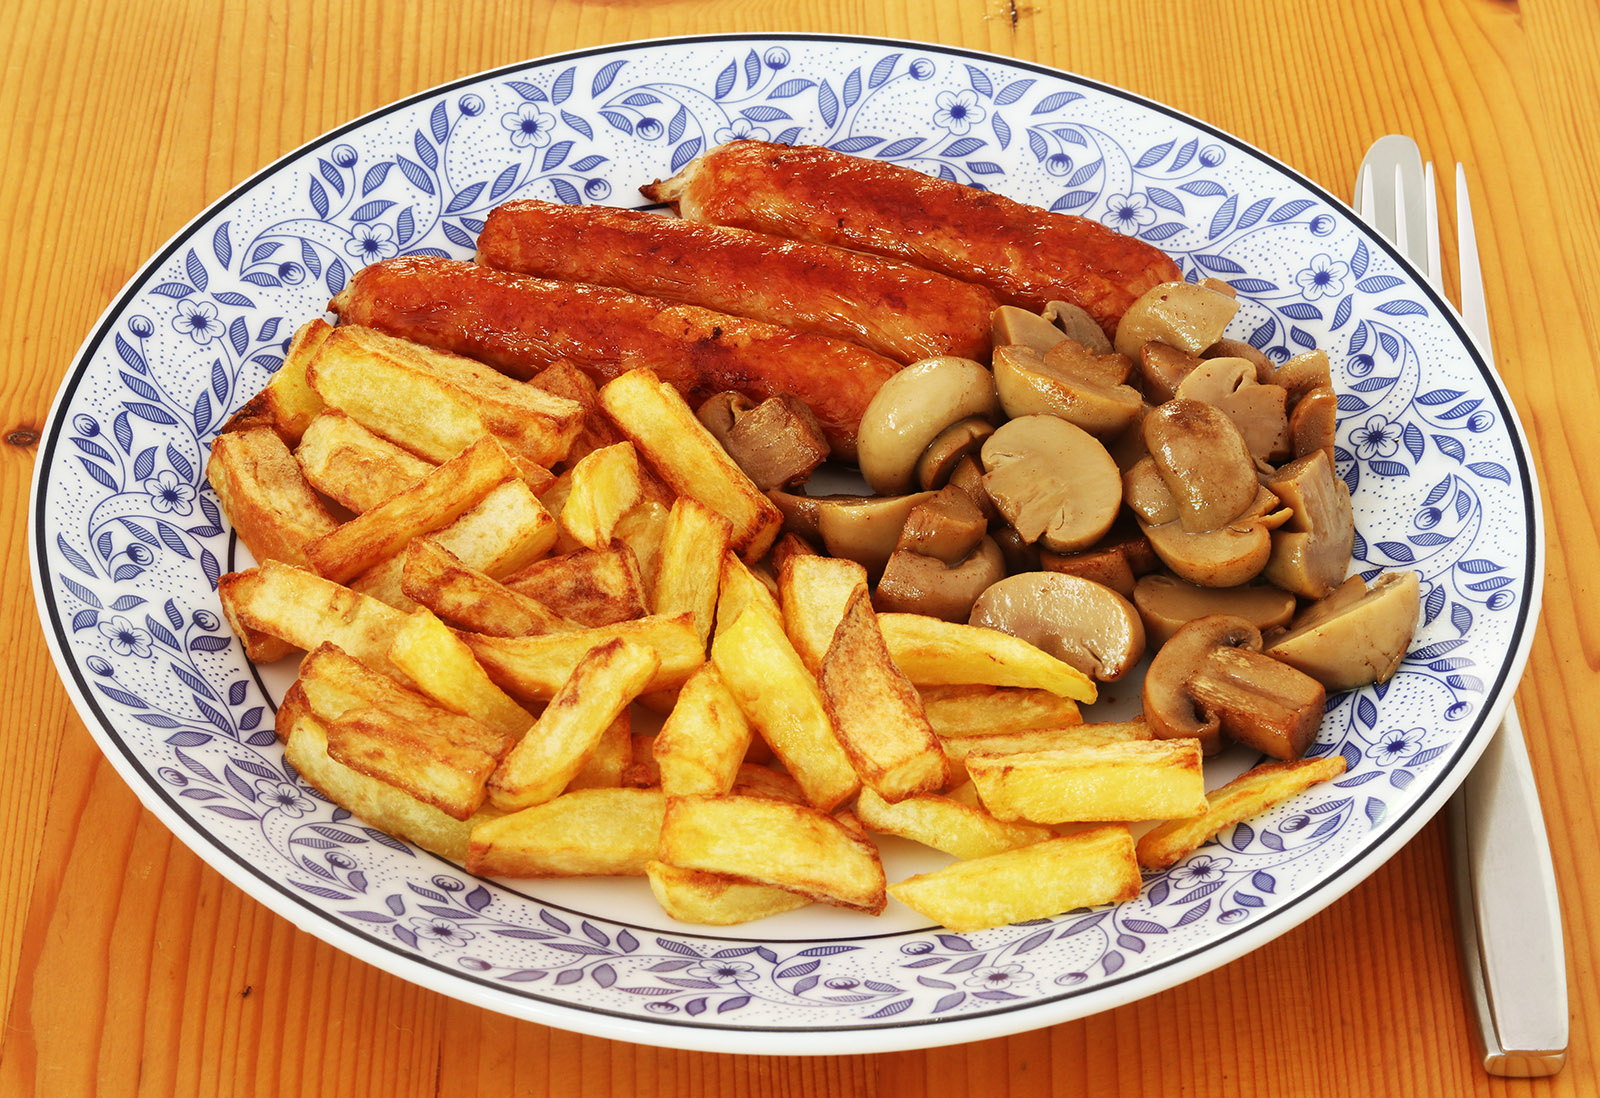 Sausage, chips, mushrooms 2 s.jpg